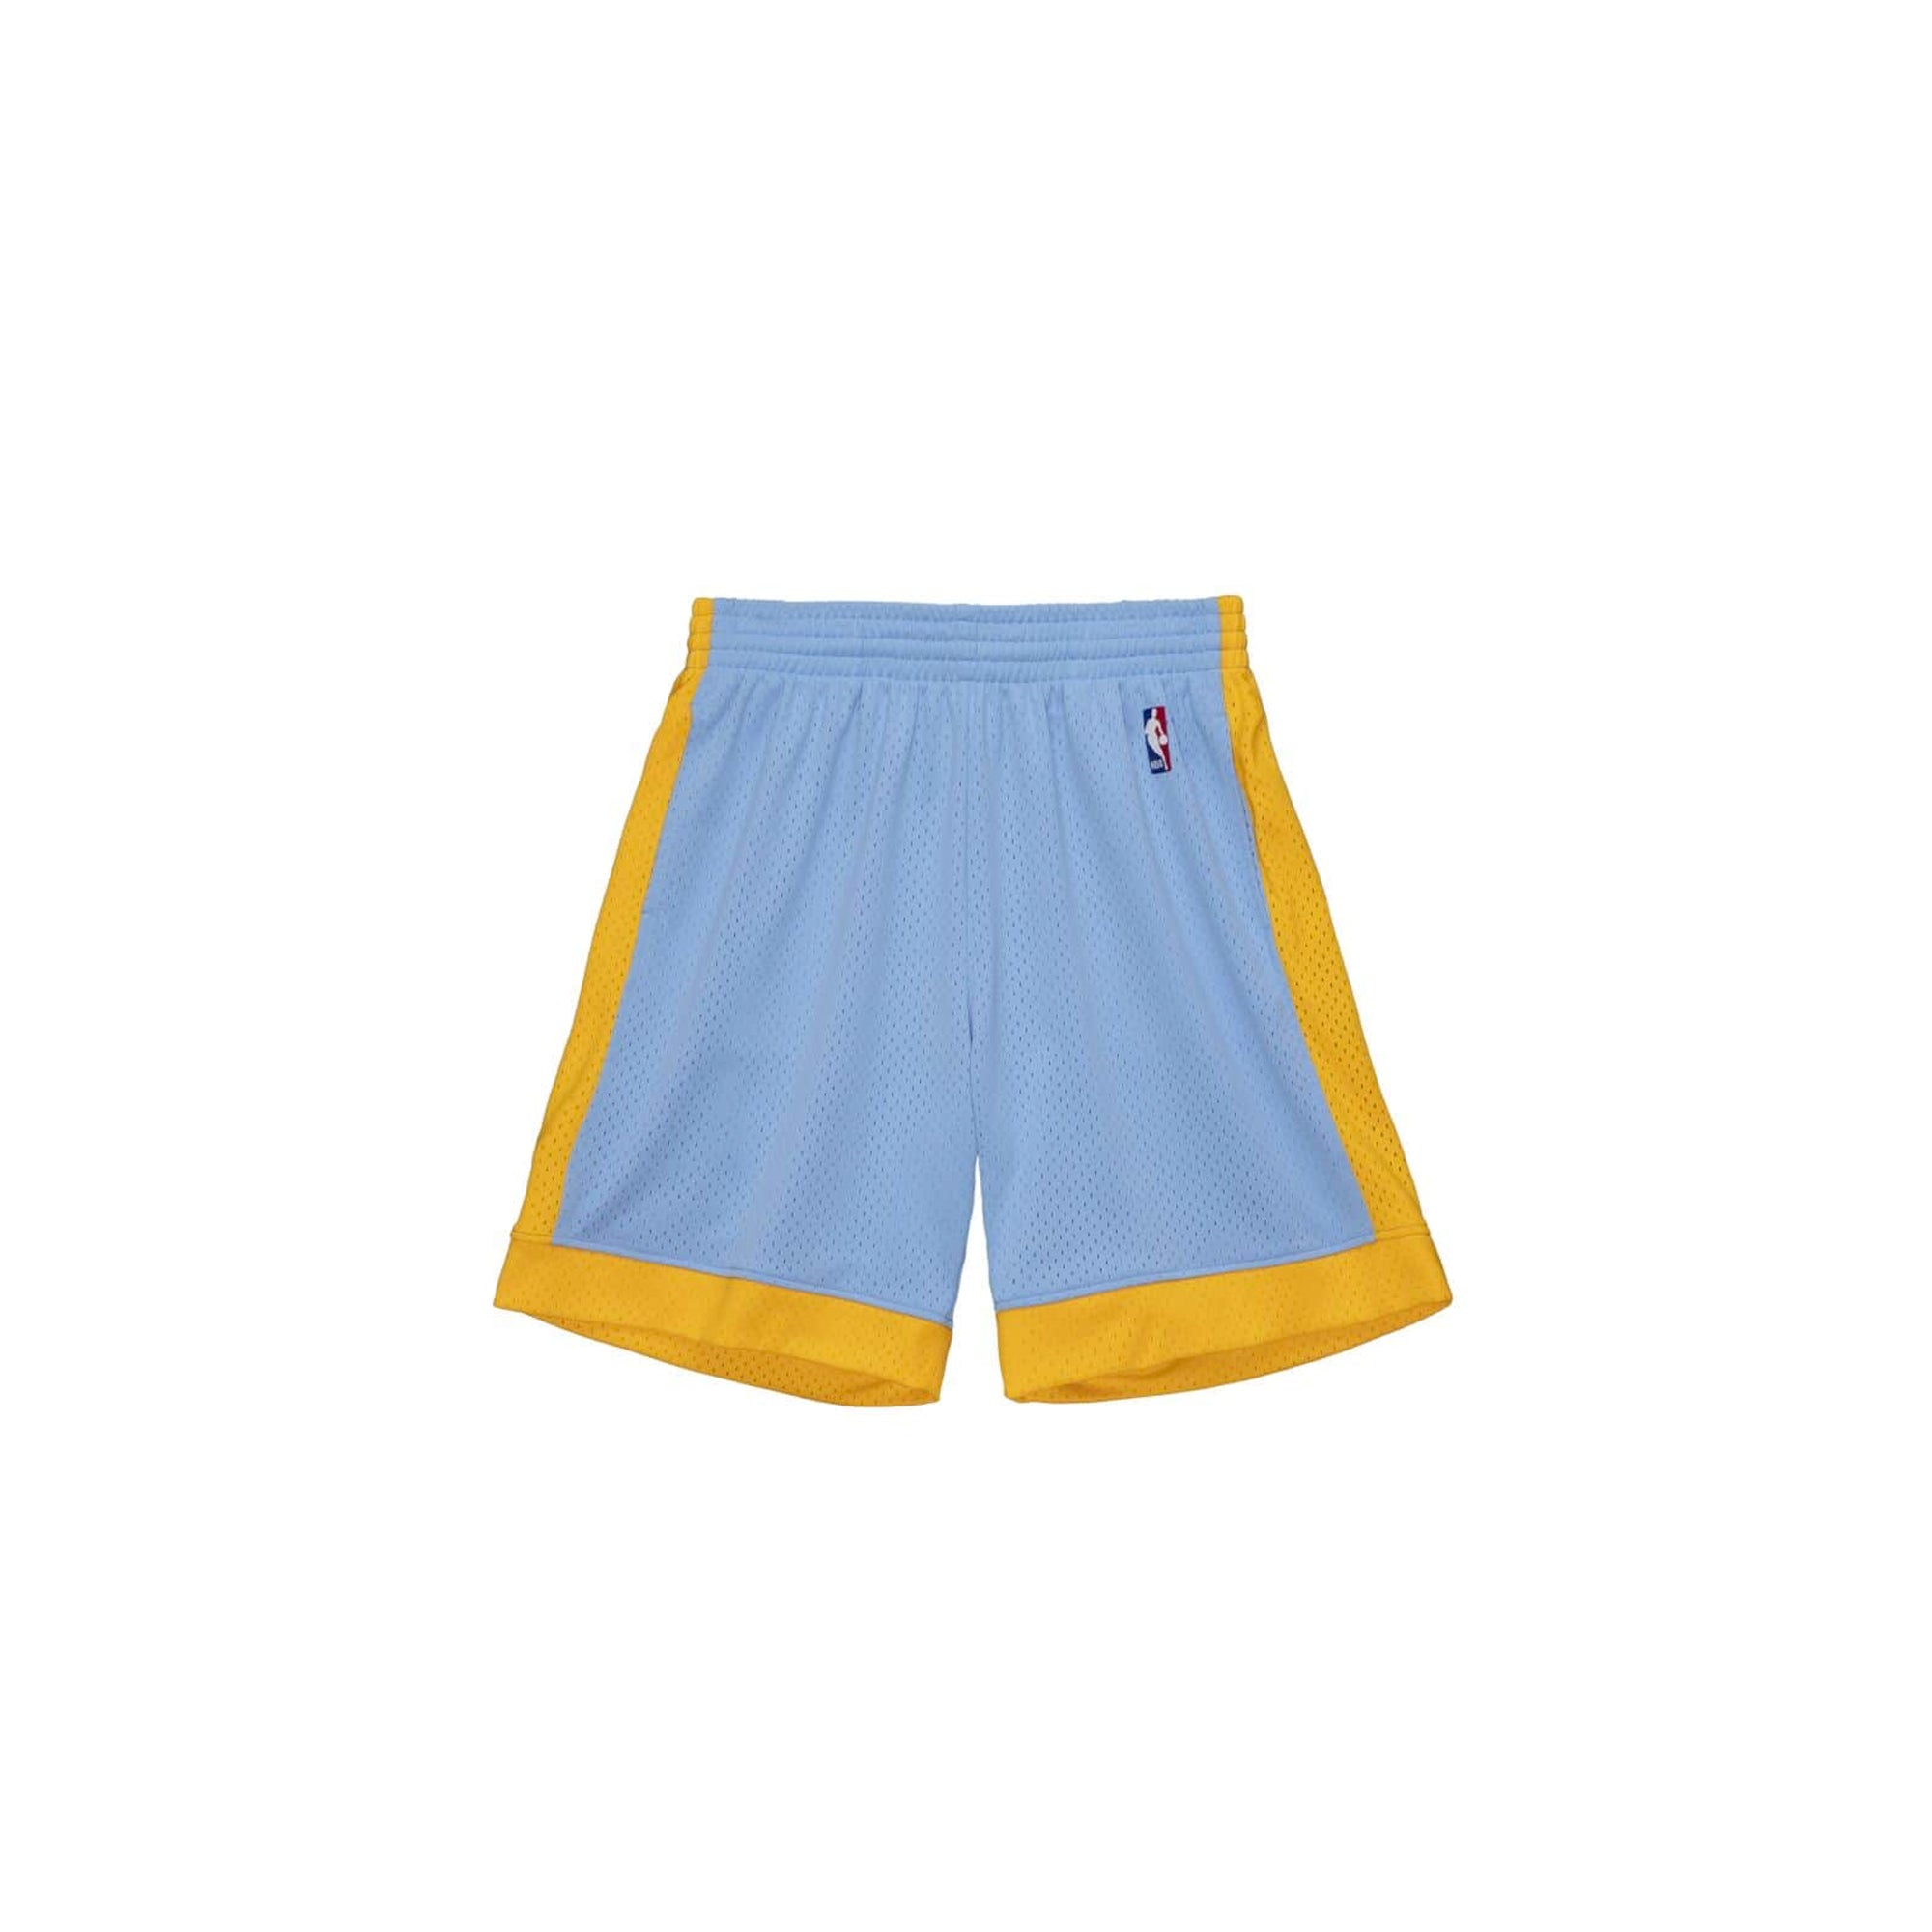 Mitchell & Ness NBA LA Lakers Striped Swingman shorts in blue/white